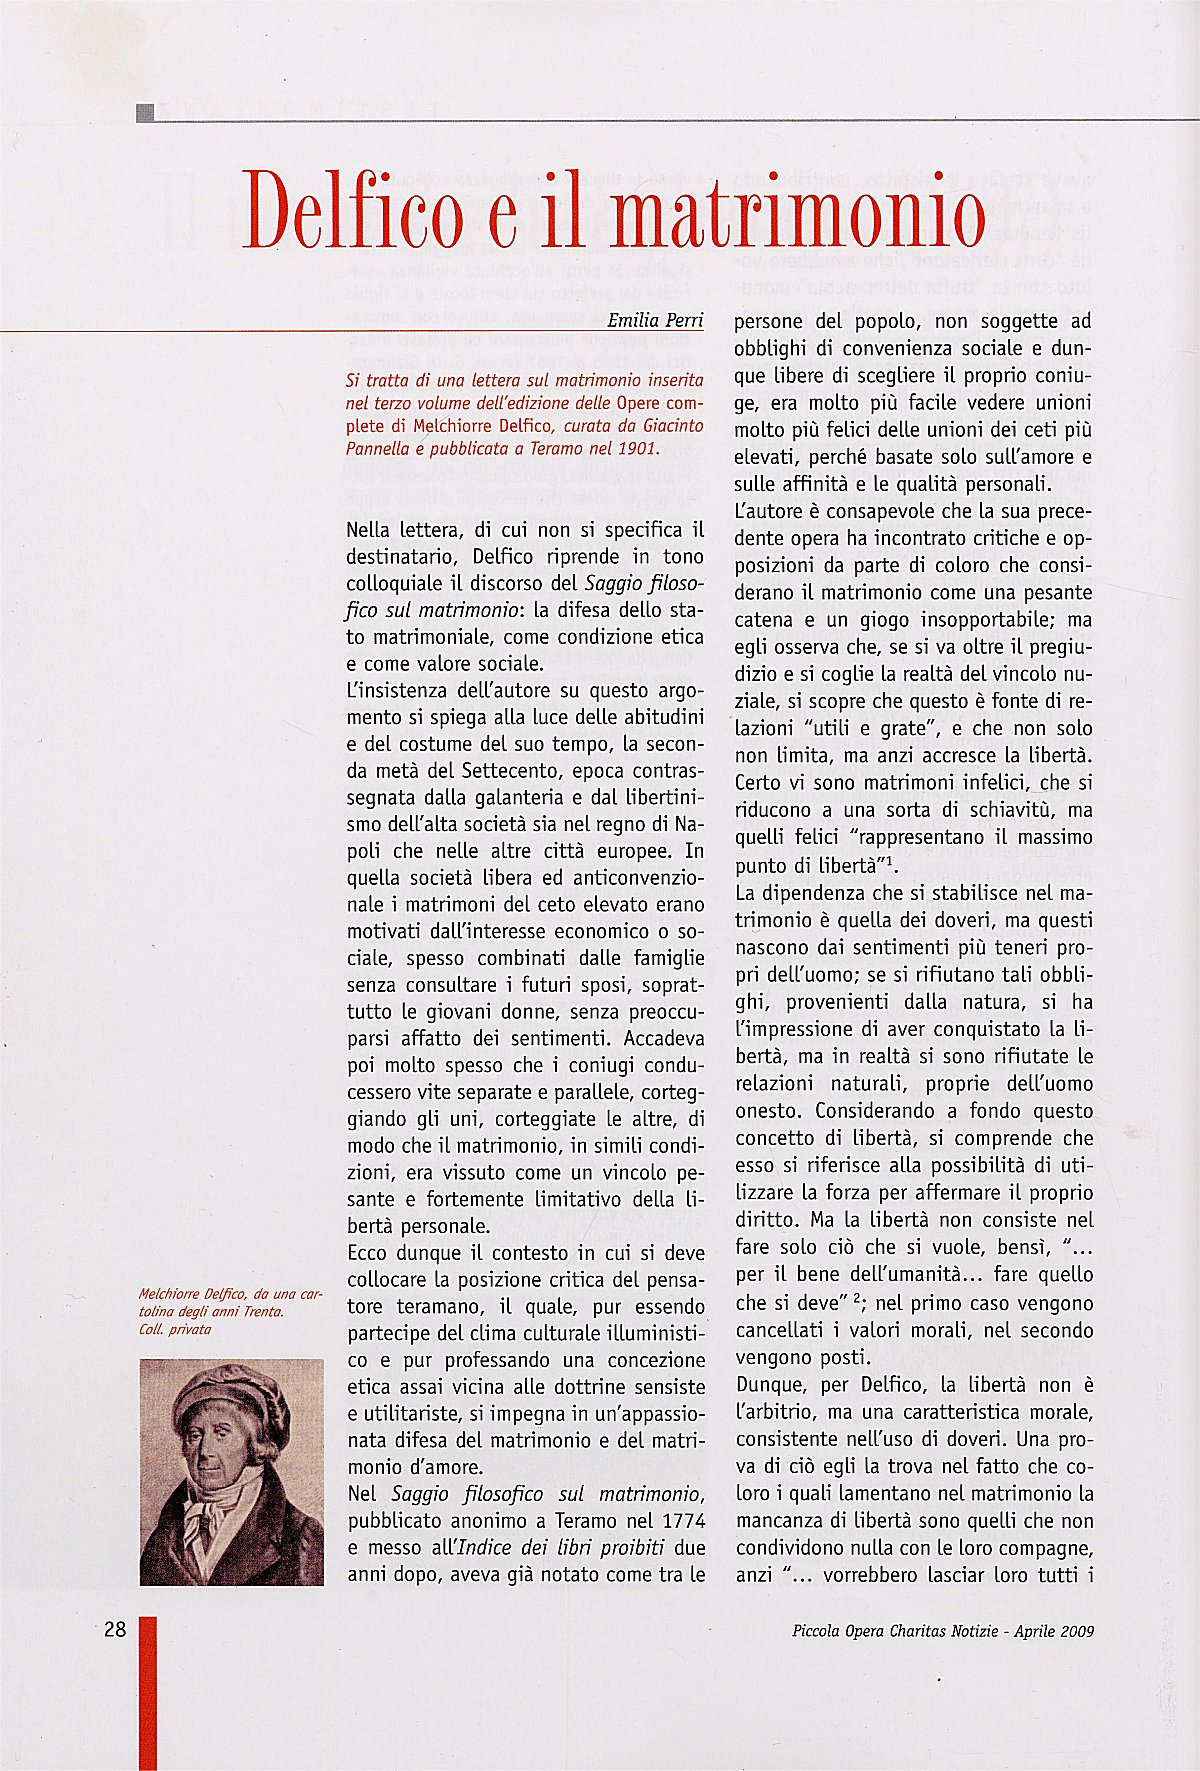 Piccola Opera Charitas, anno IX, n. 1, gennaio-aprile 2009, pag. 28